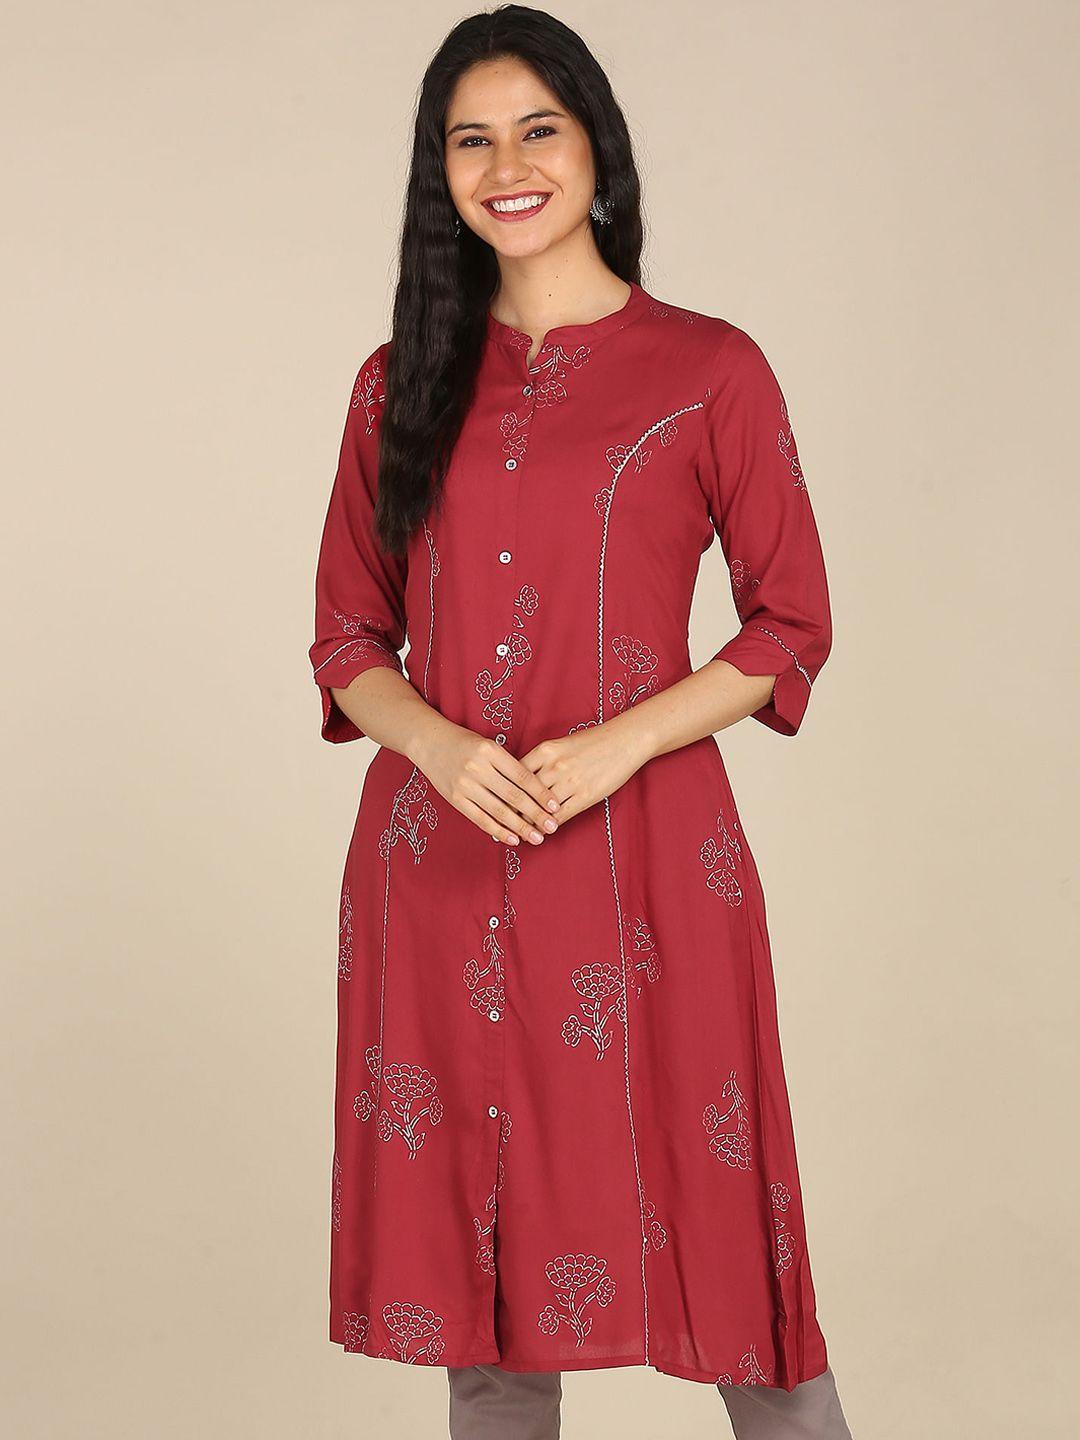 karigari-women-red-ethnic-motifs-embroidered-thread-work-kurta